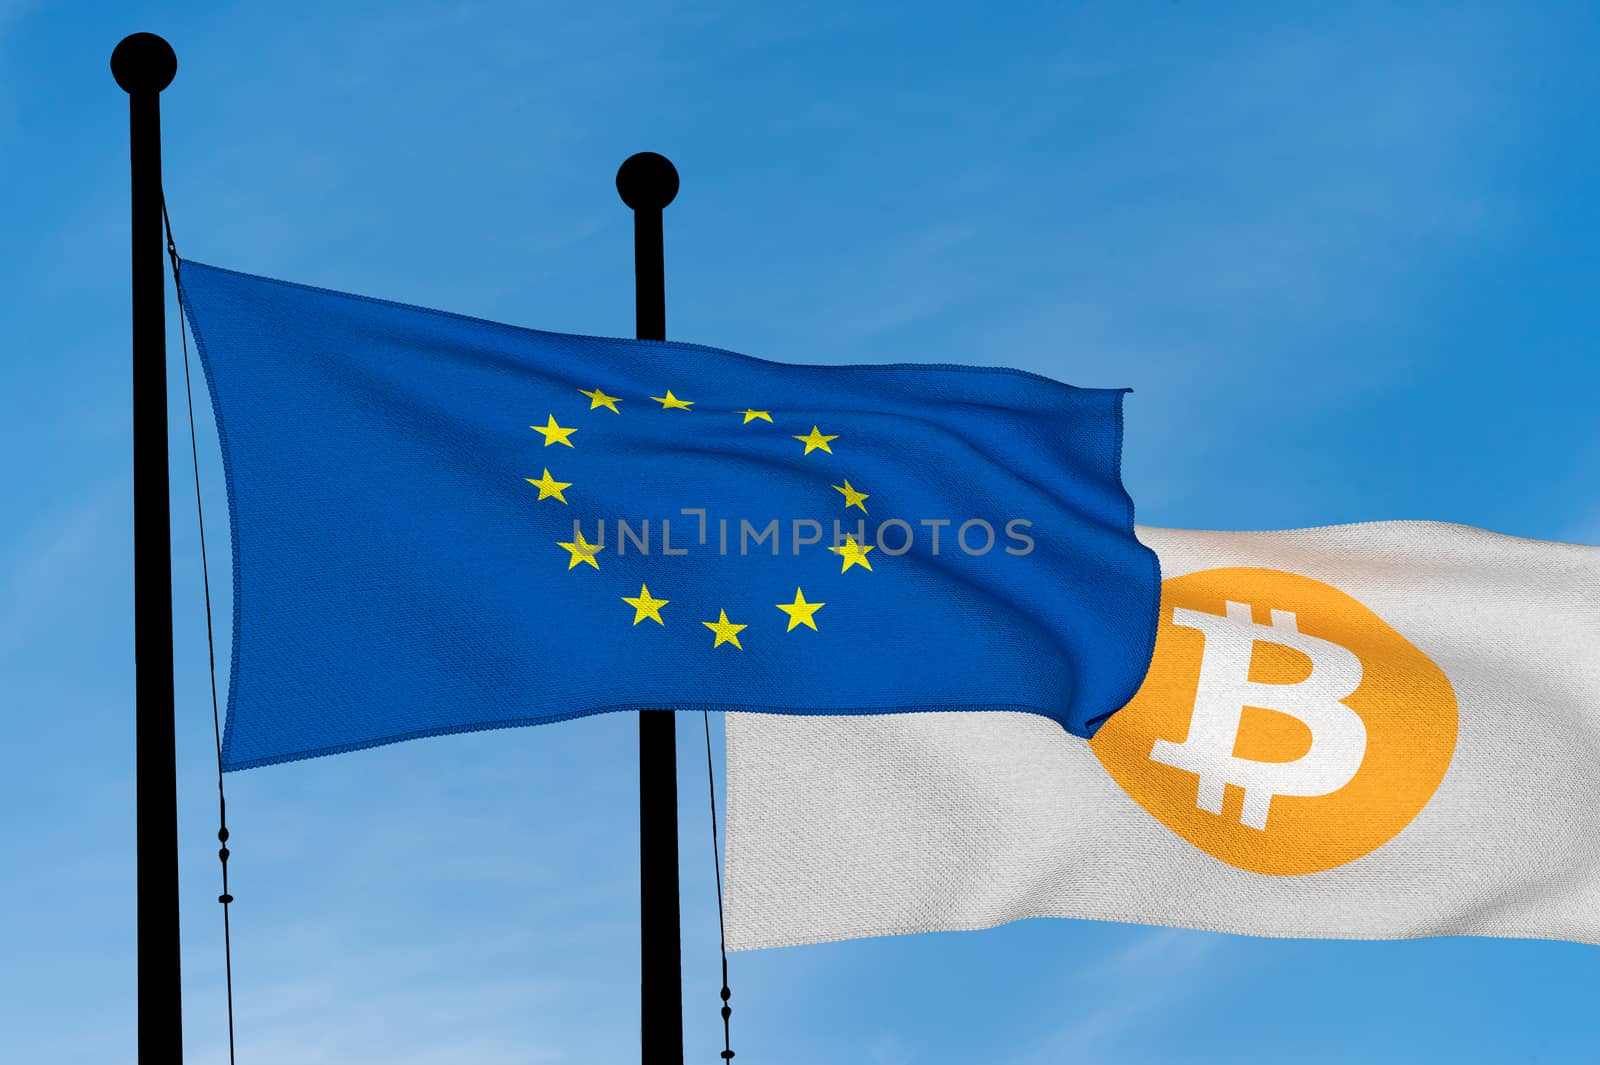 European flag and Bitcoin Flag waving over blue sky (digitally g by mbruxelle